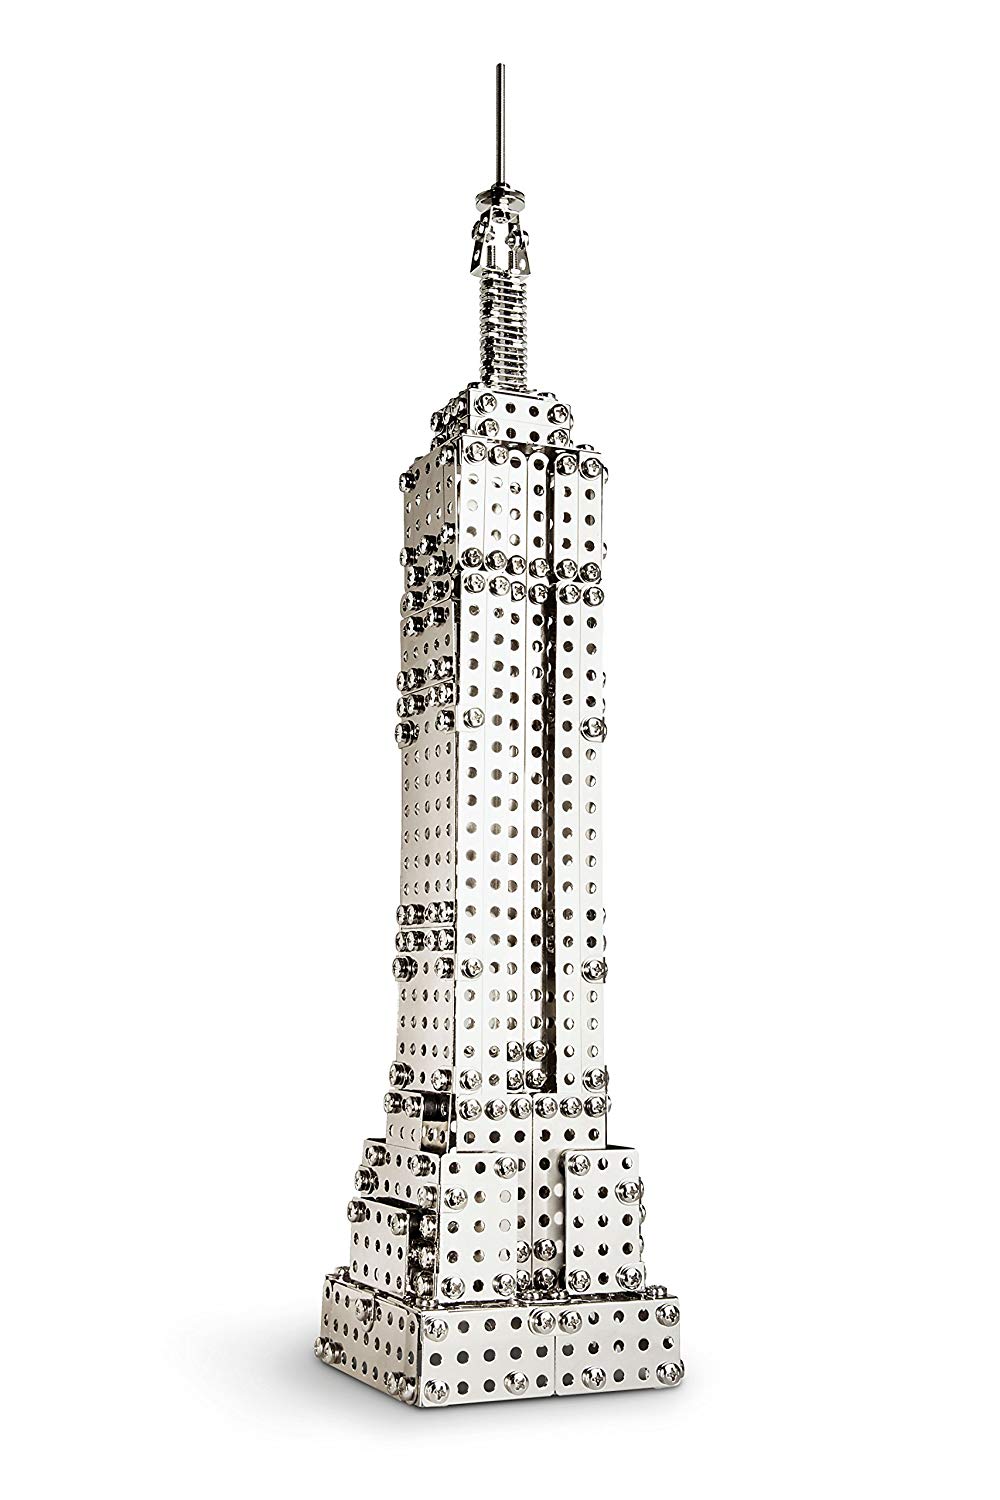 Eitech Empire State Building Metal Construction Kit Set Piece